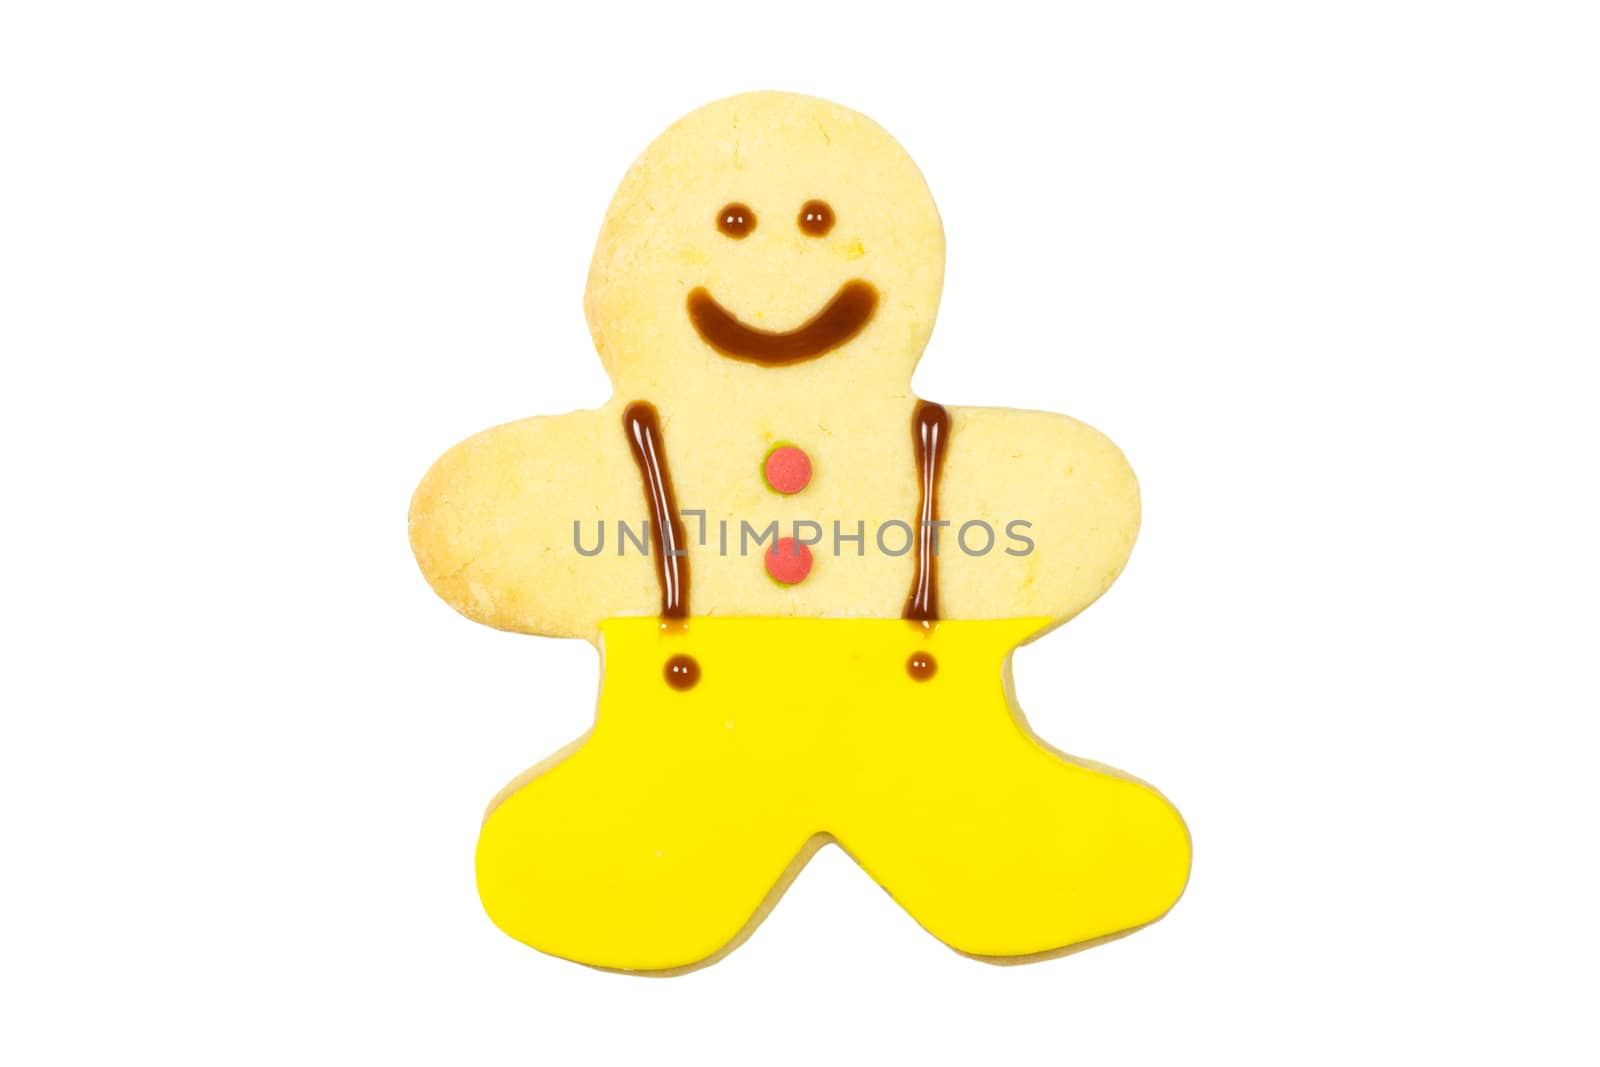 Gingerbread man by wyoosumran